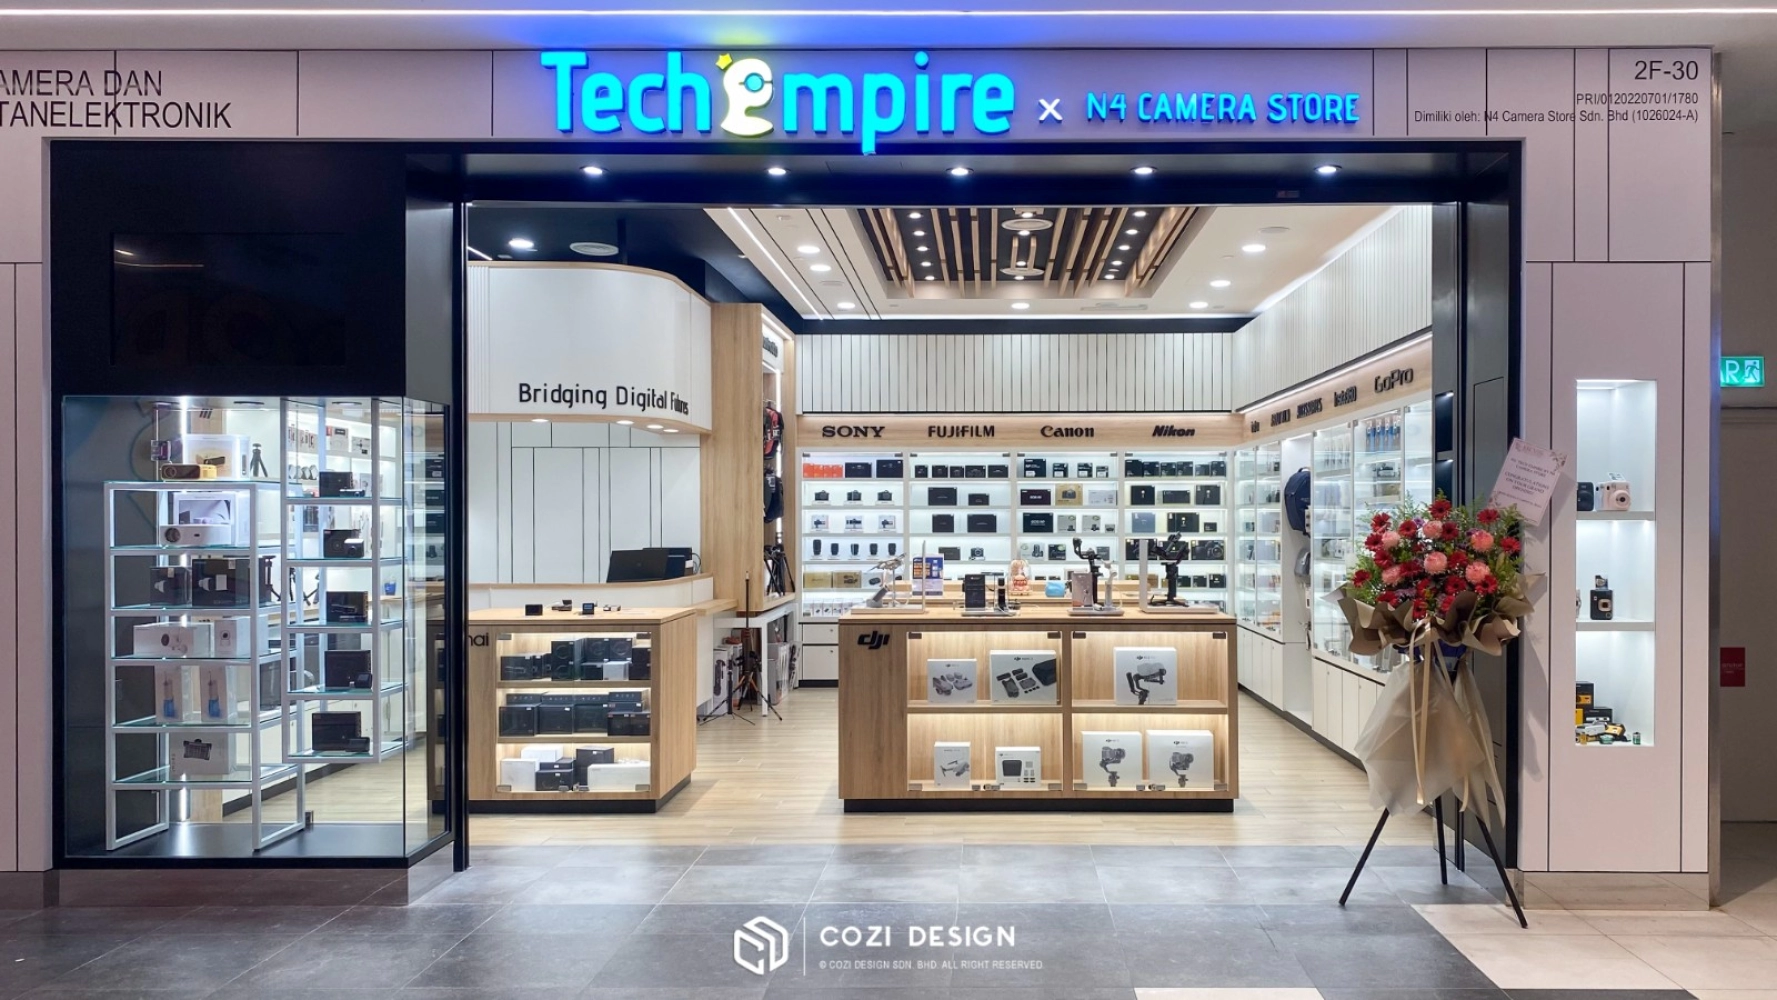 Tech Empire x N4 Camera Store @ Sunway Carnival Mall